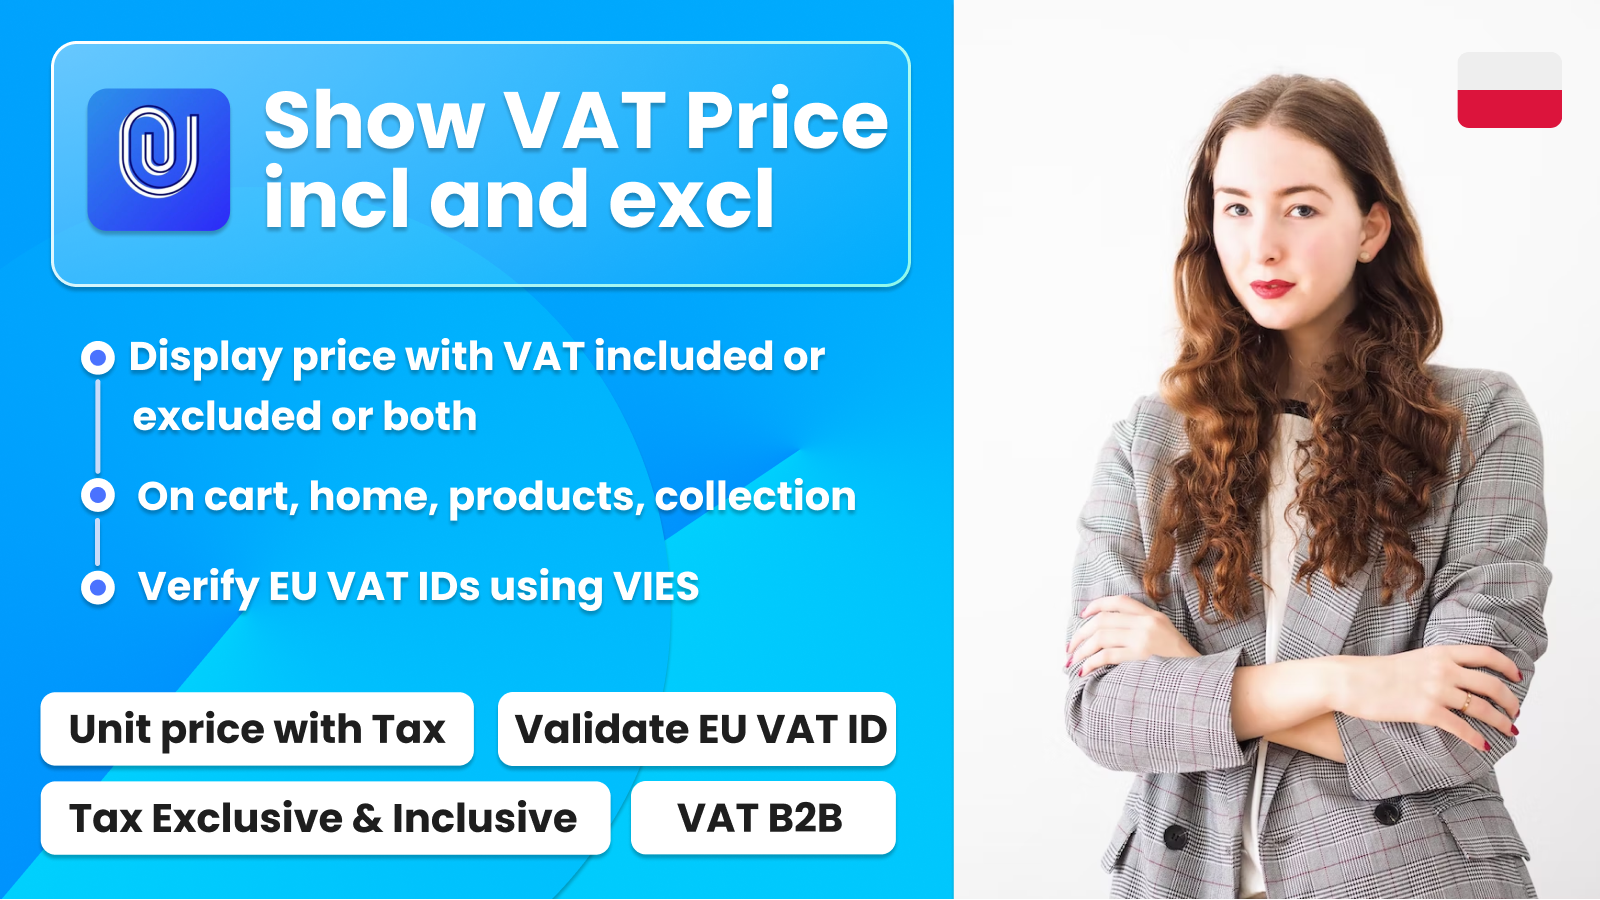 Zatwierdź VAT i Pokaż ceny netto/brutto